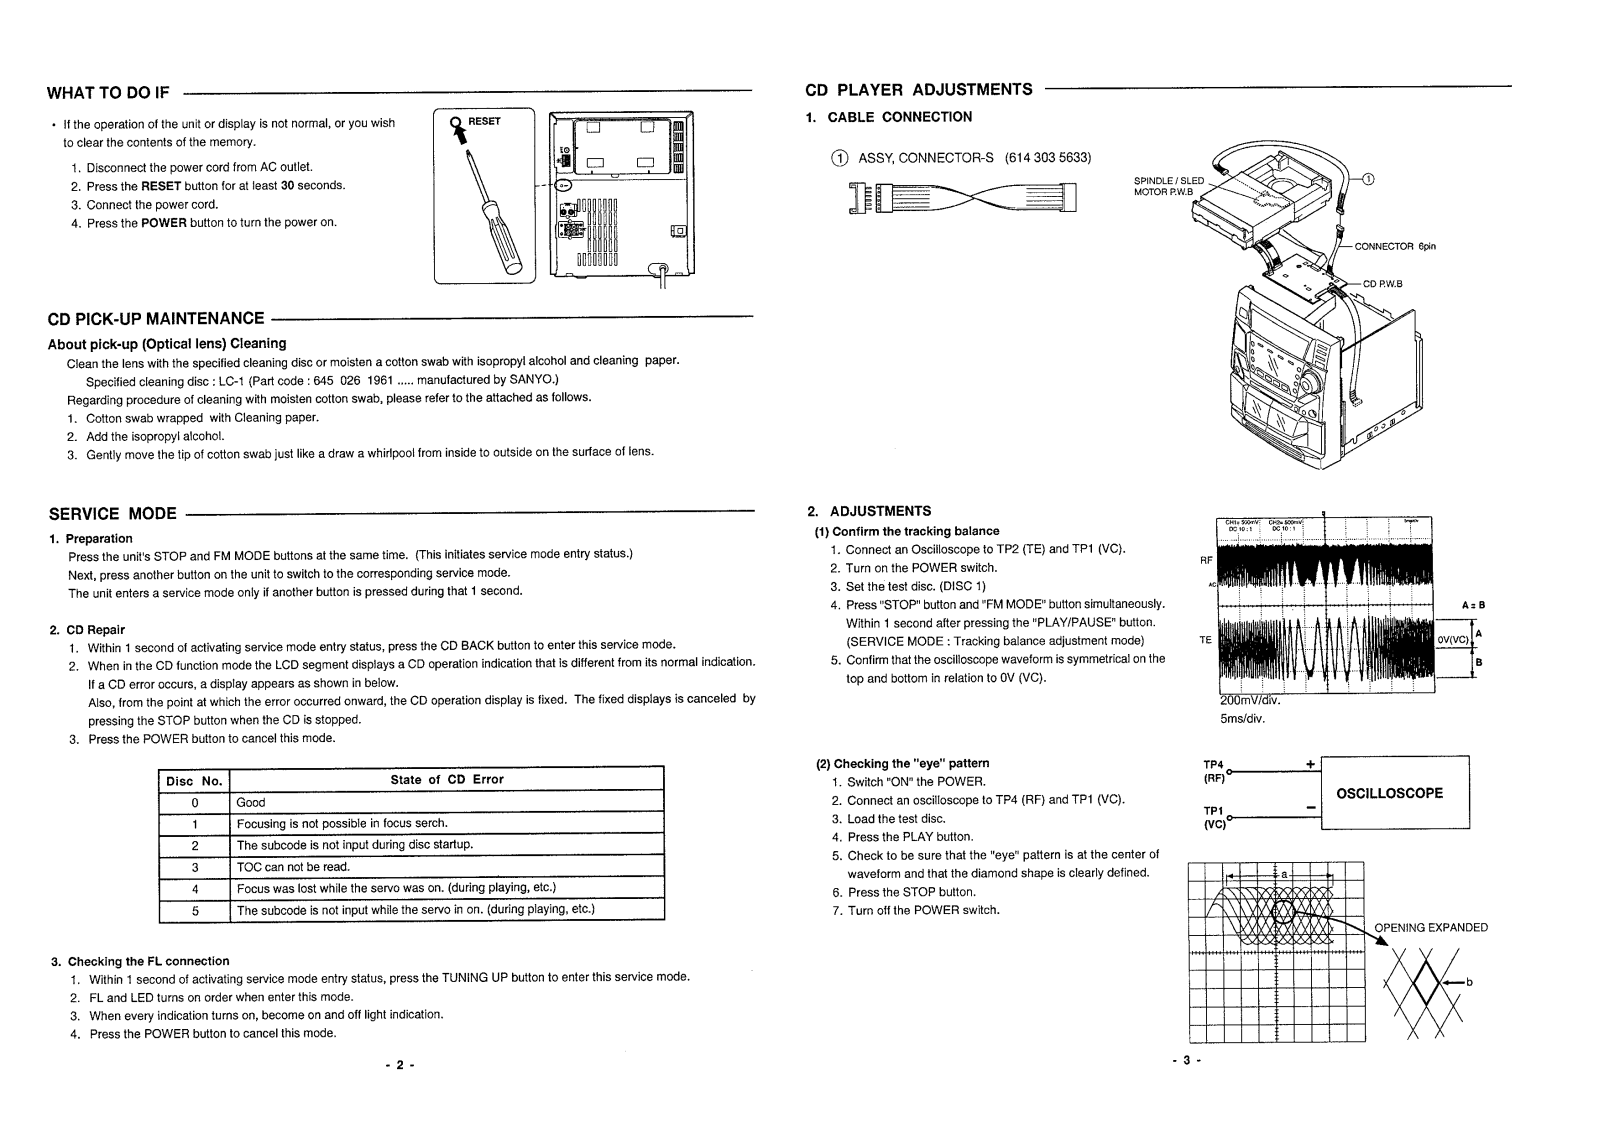 Sanyo DCC-50 Service manual